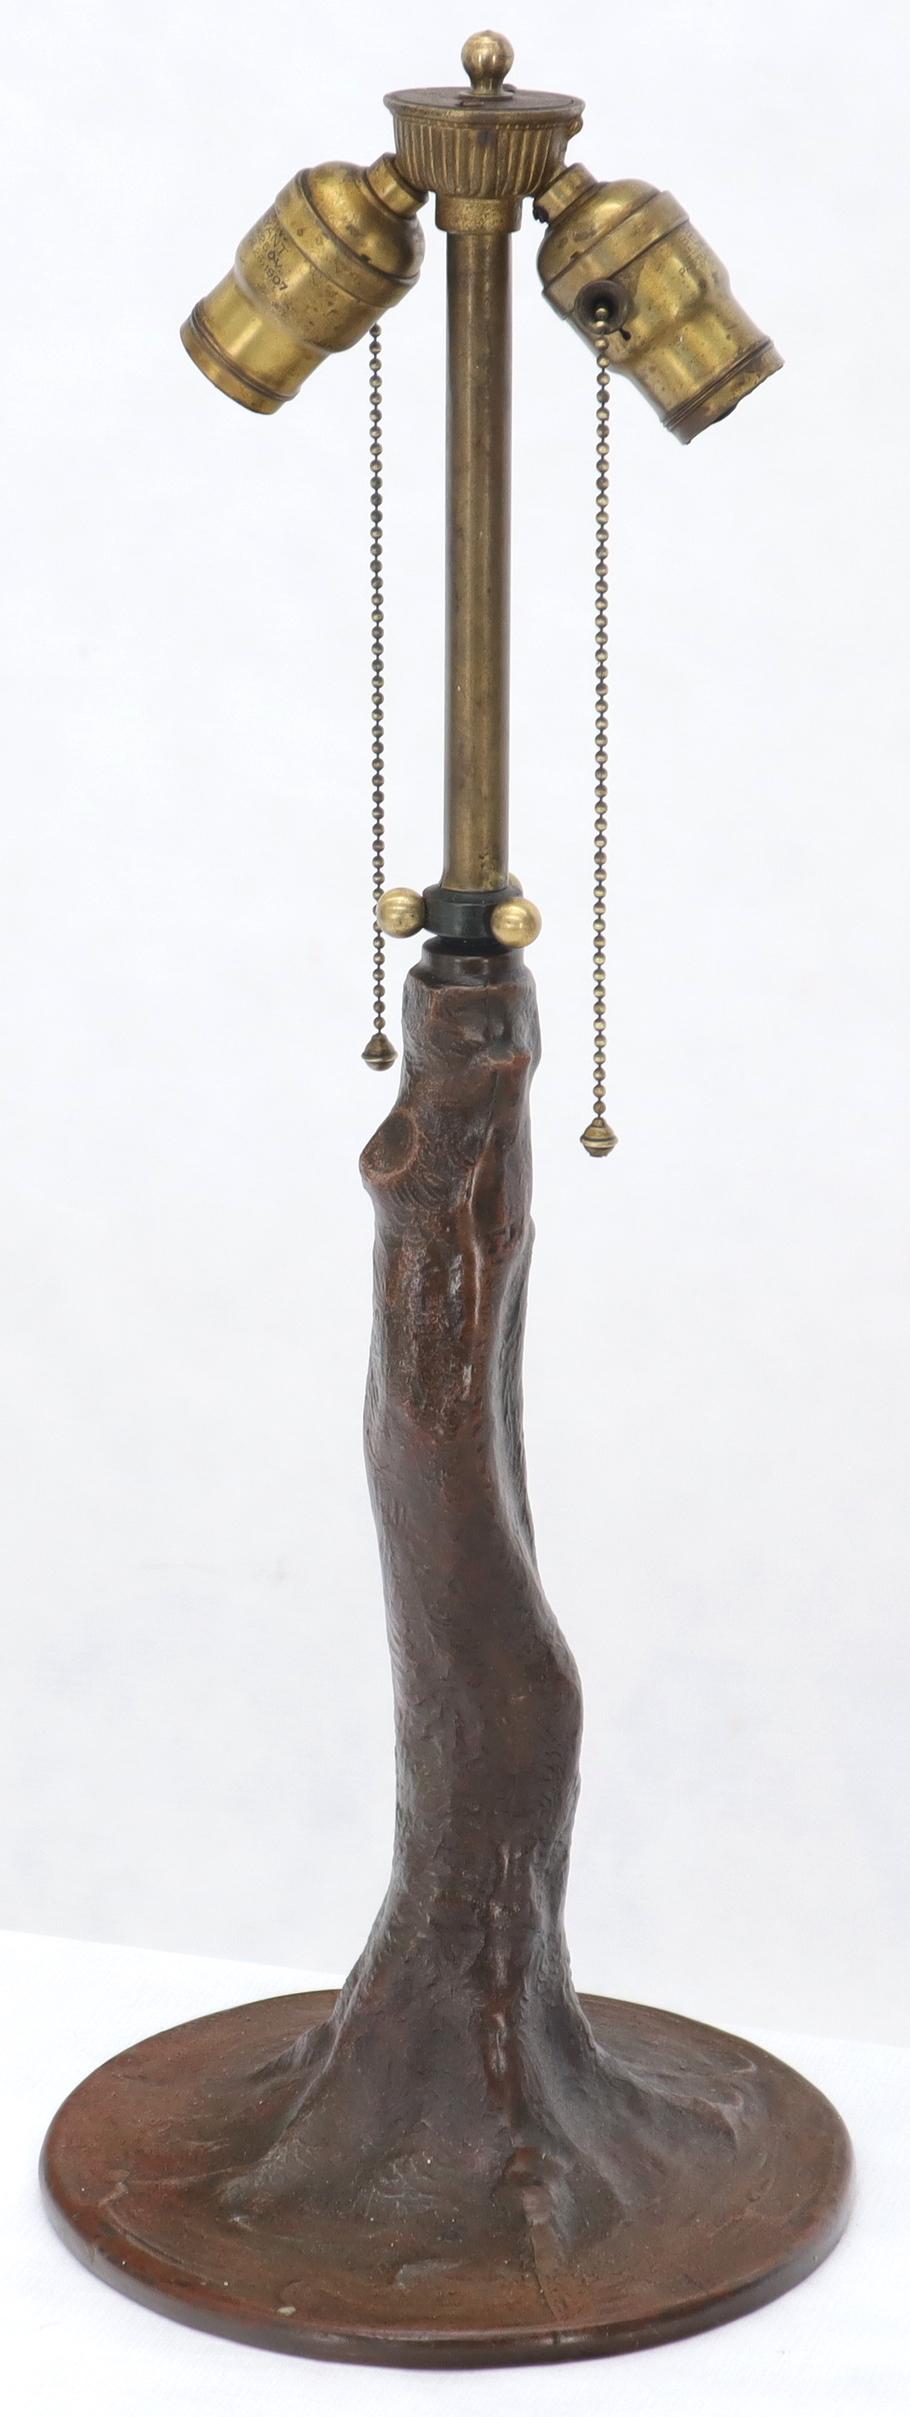 Signed Handel solid bronze tree stem table lamp base, circa 1920s.